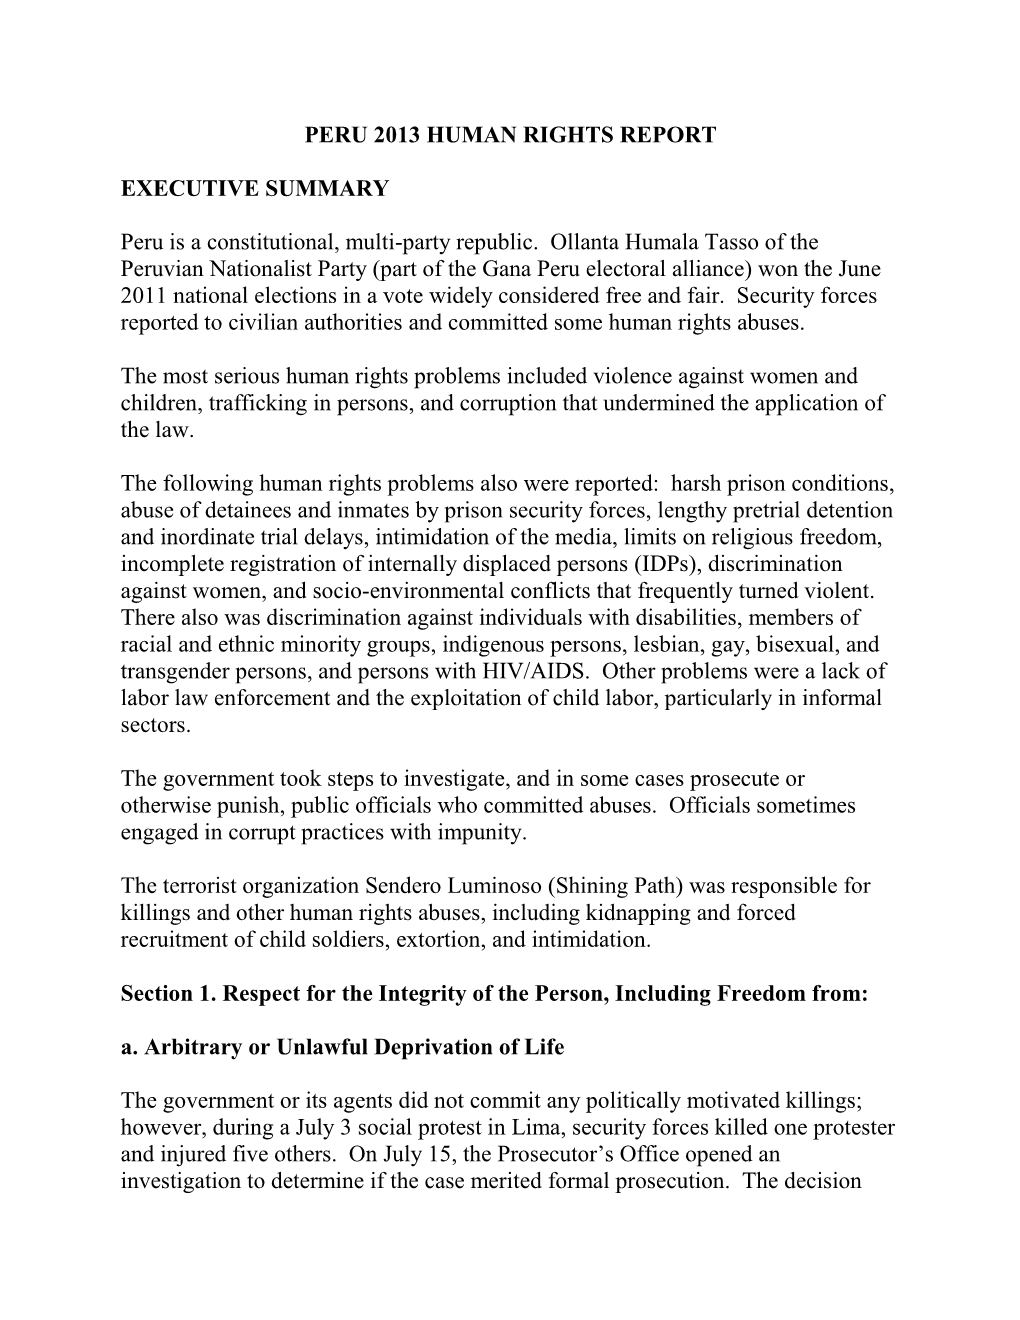 Peru 2013 Human Rights Report